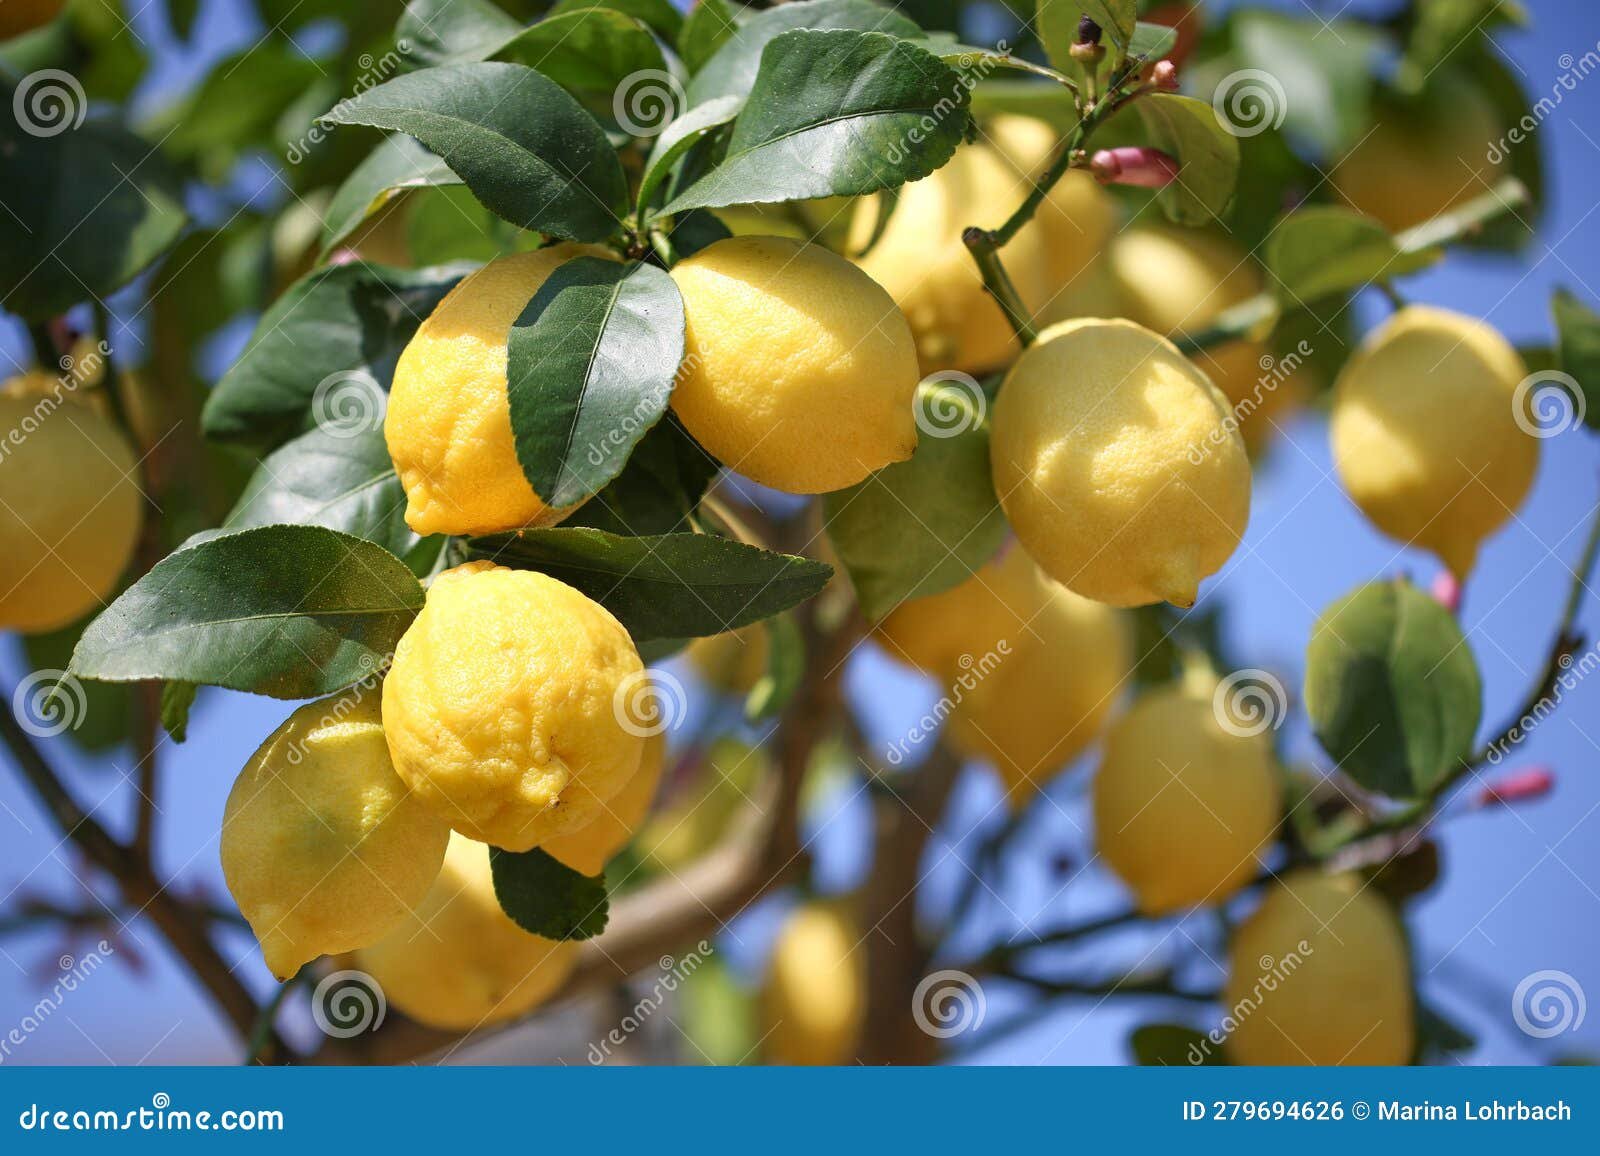 Limones maduros listos para ser cosechados